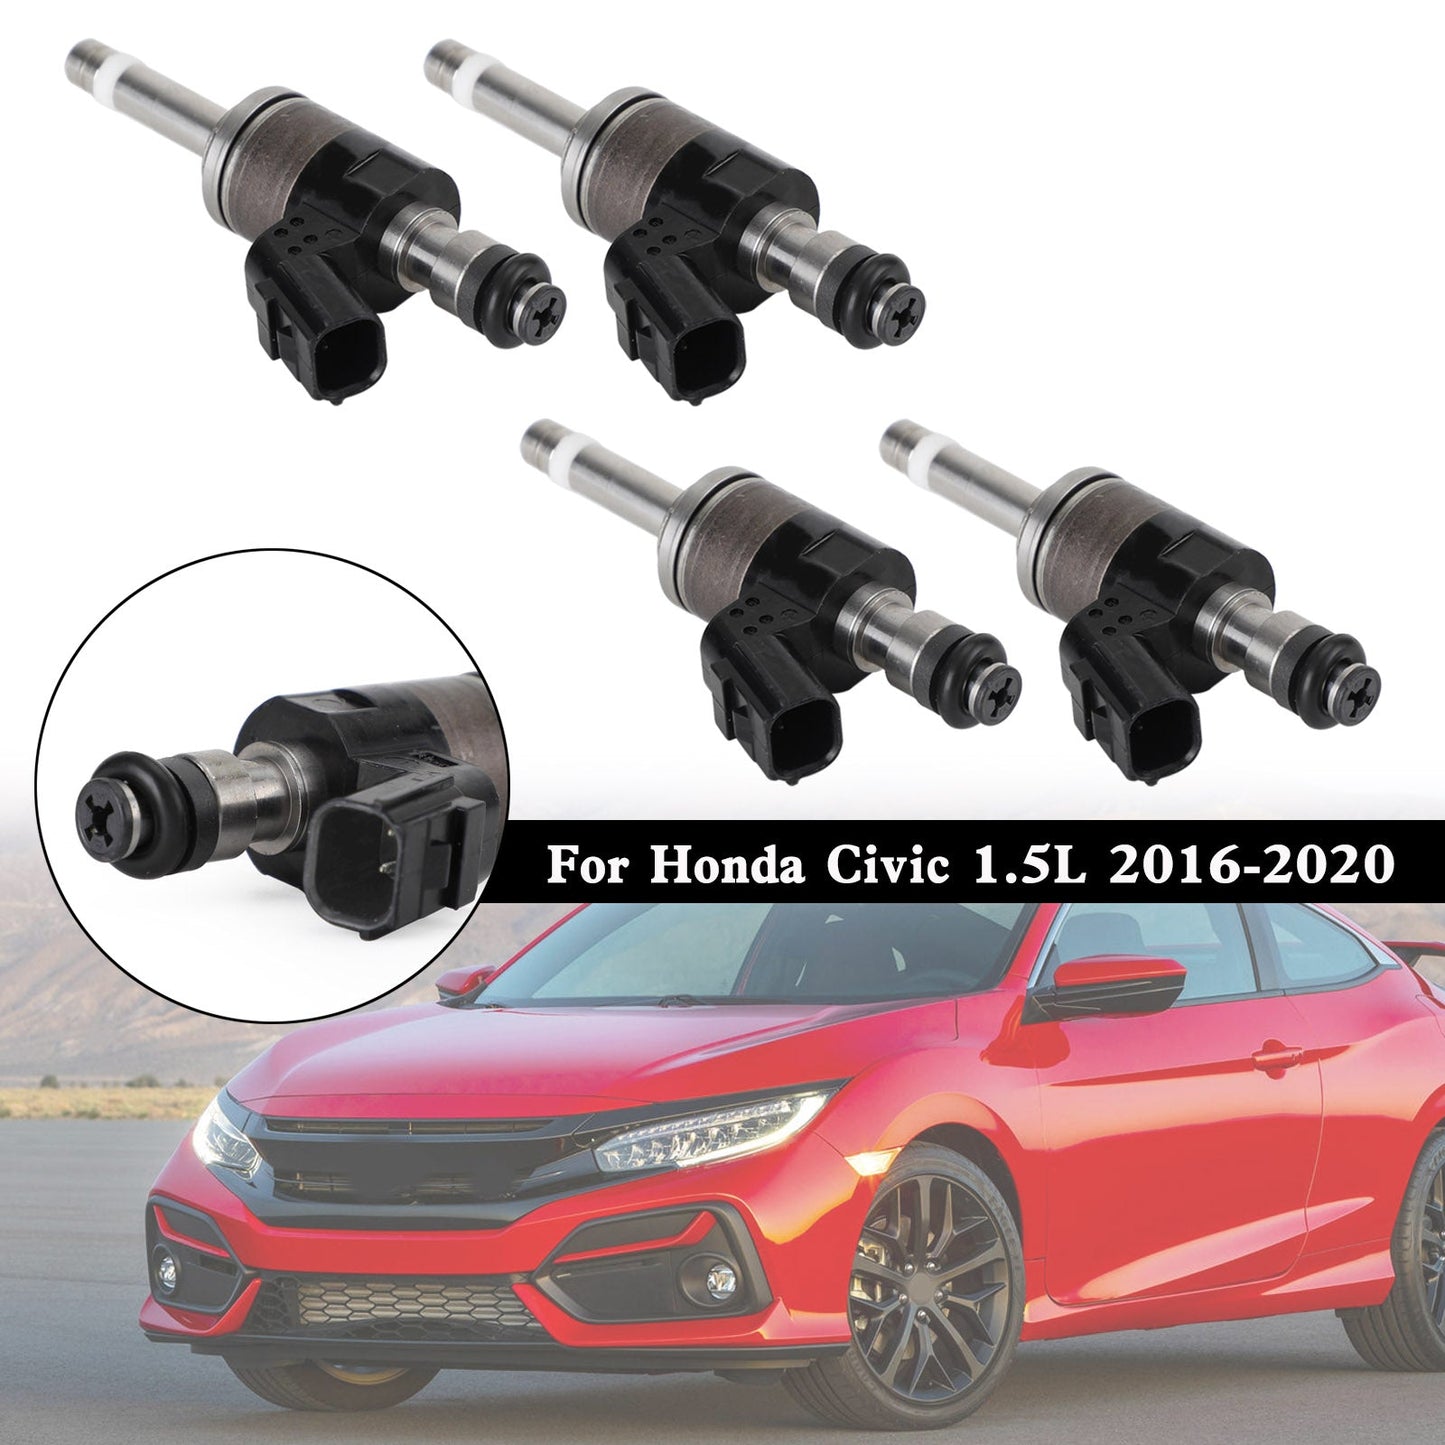 Honda Civic 1.5L 2016-2020 16010-59B-305 4PCS Einspritzdüsen 16010-59B-315